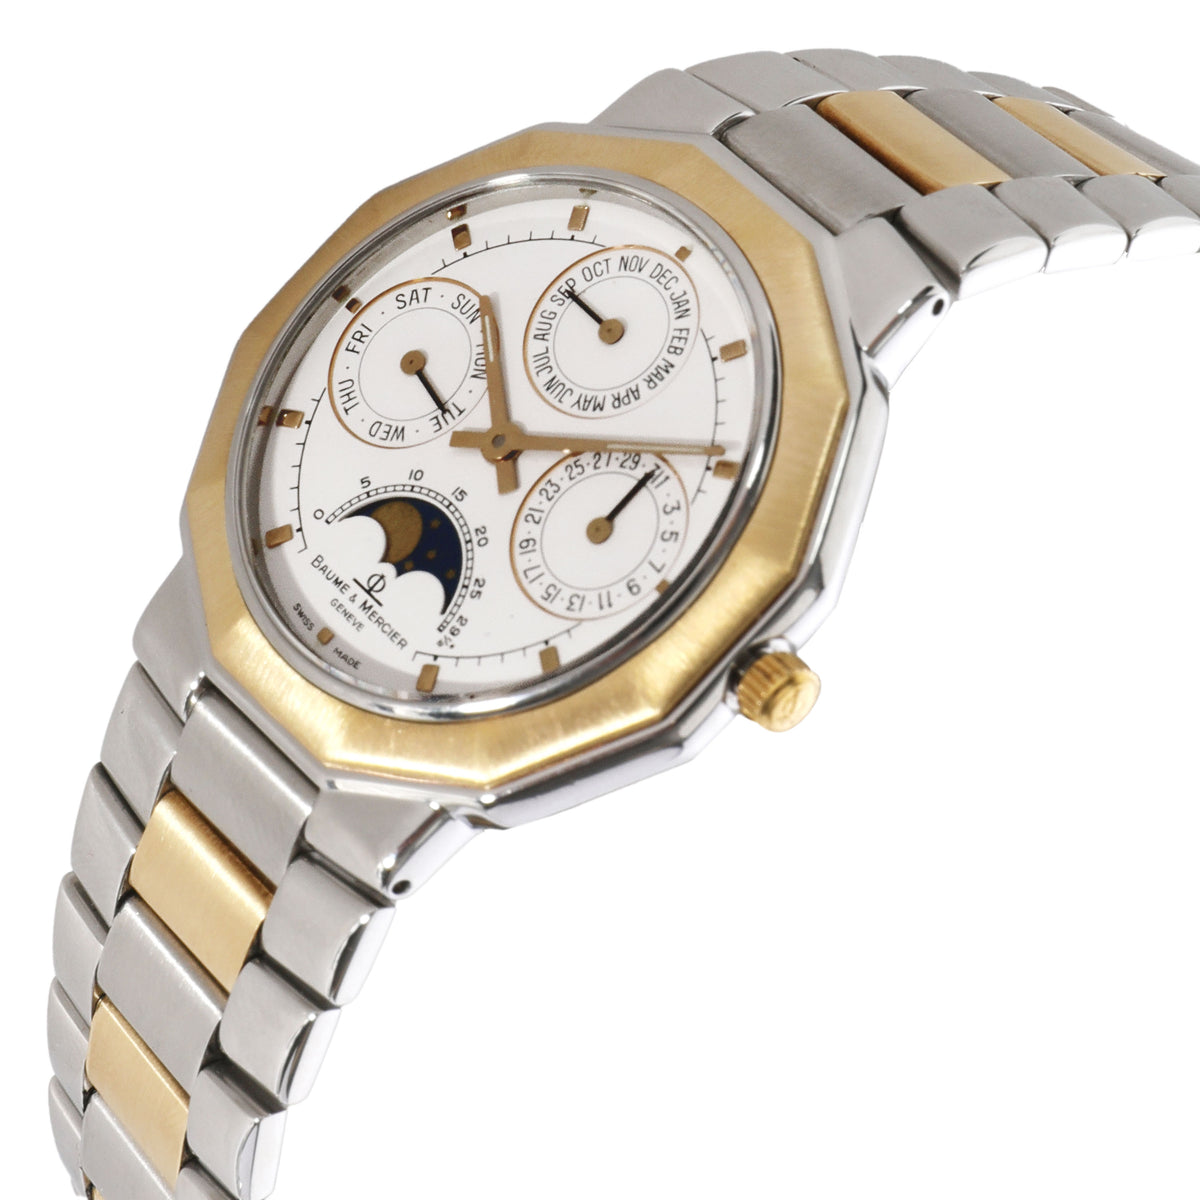 Baume & Mercier Rivera 6131.038 Men's Watch in 18kt Stainless Steel/Yellow Gold